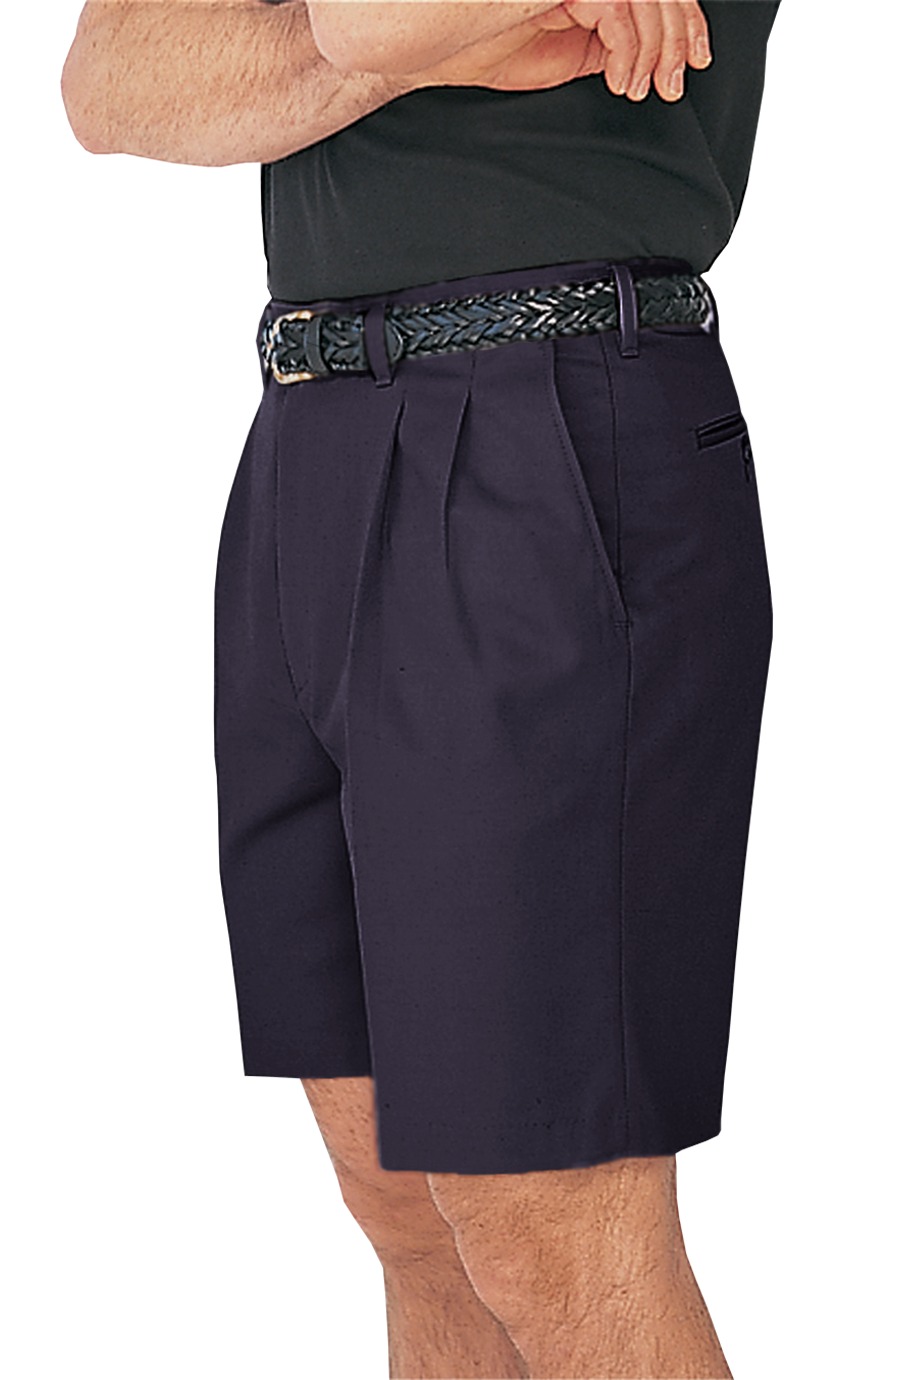 Edwards Garment 2430 - Men's All Cotton Pleated Short